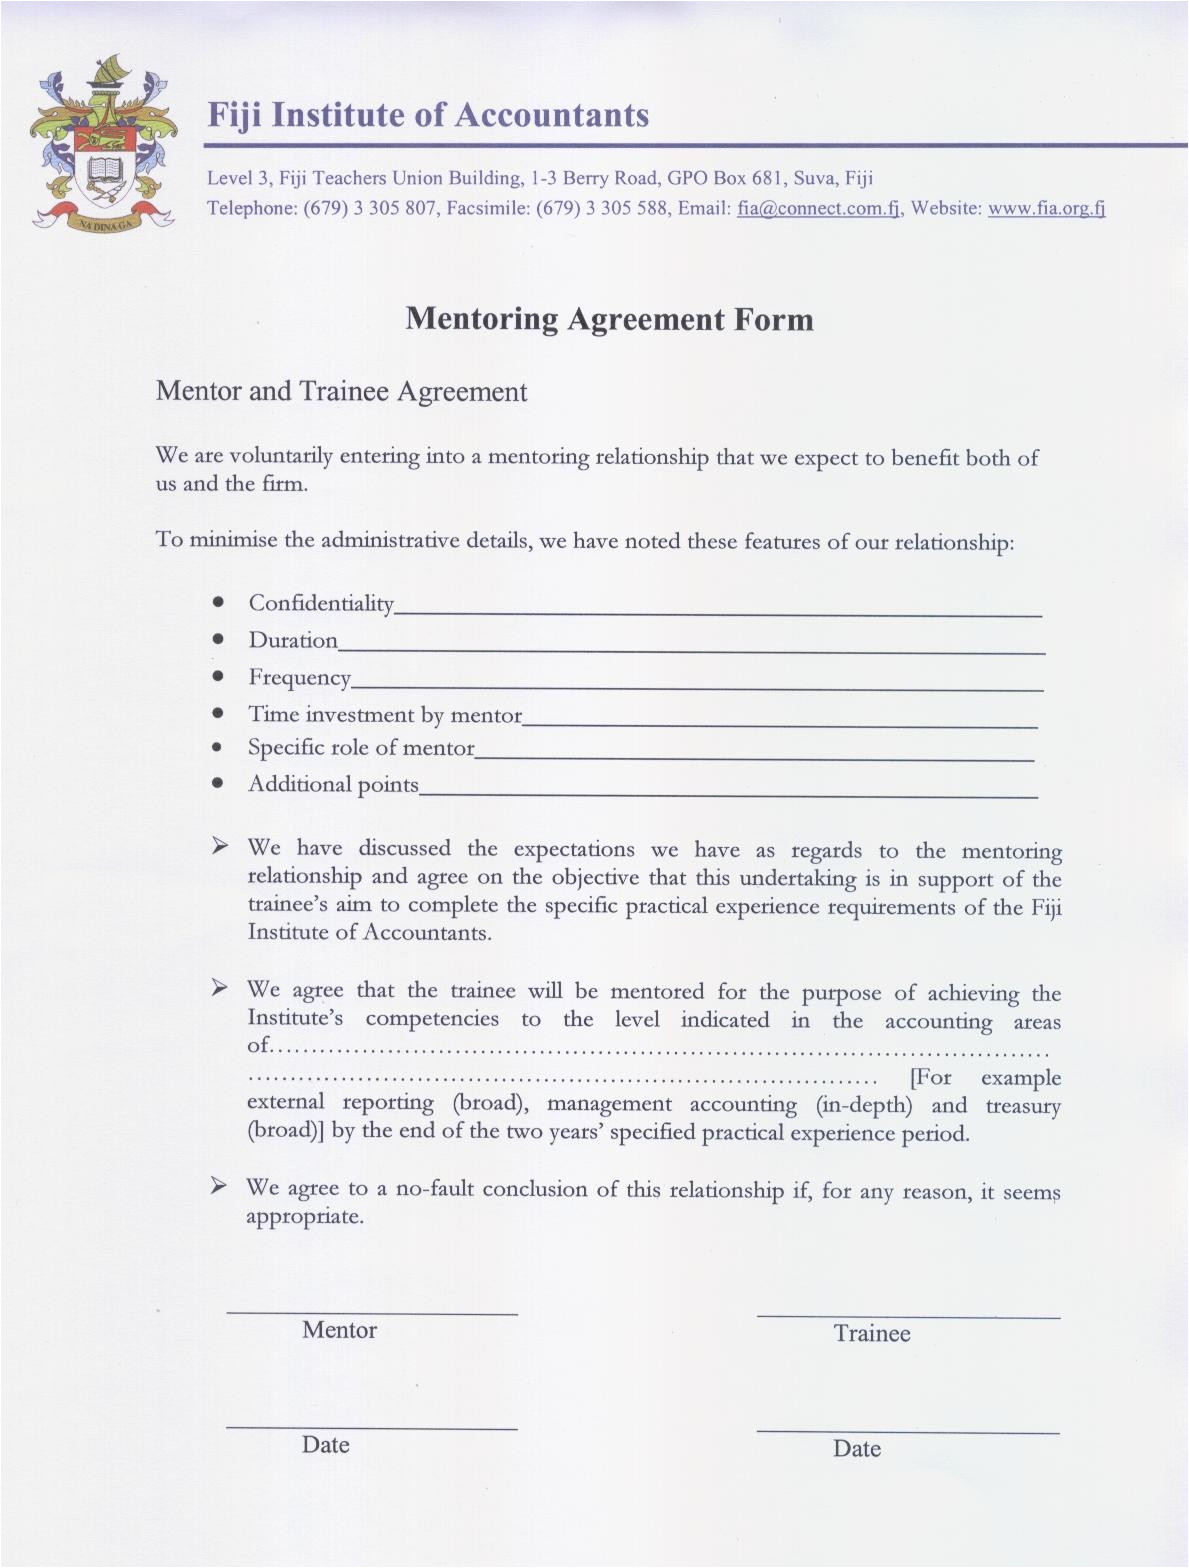 mentoring agreement form jpg